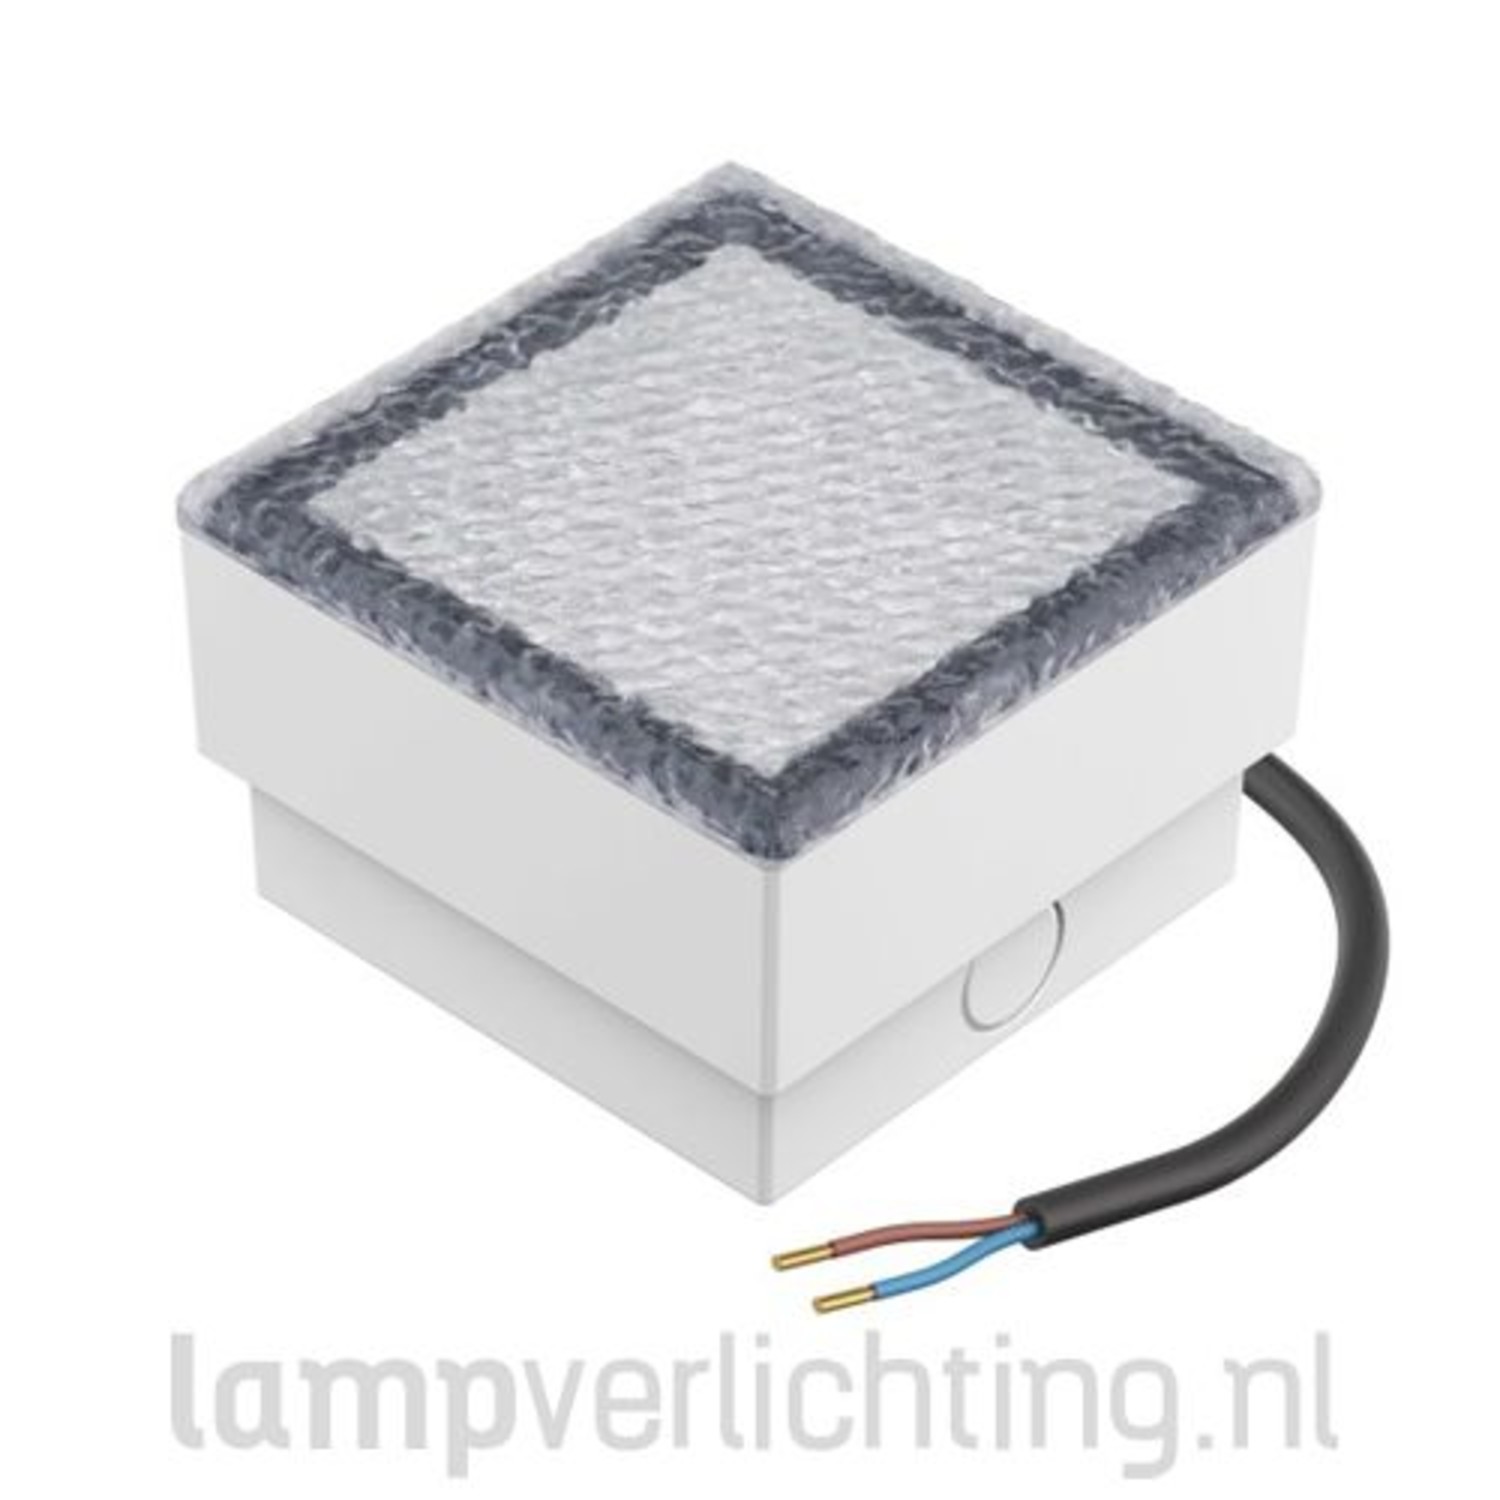 kader Waterig Respect LED Tegel Steen 10x10 cm - Voor Terras of Tuin - 230V - Beste Deal -  LampVerlichting.nl